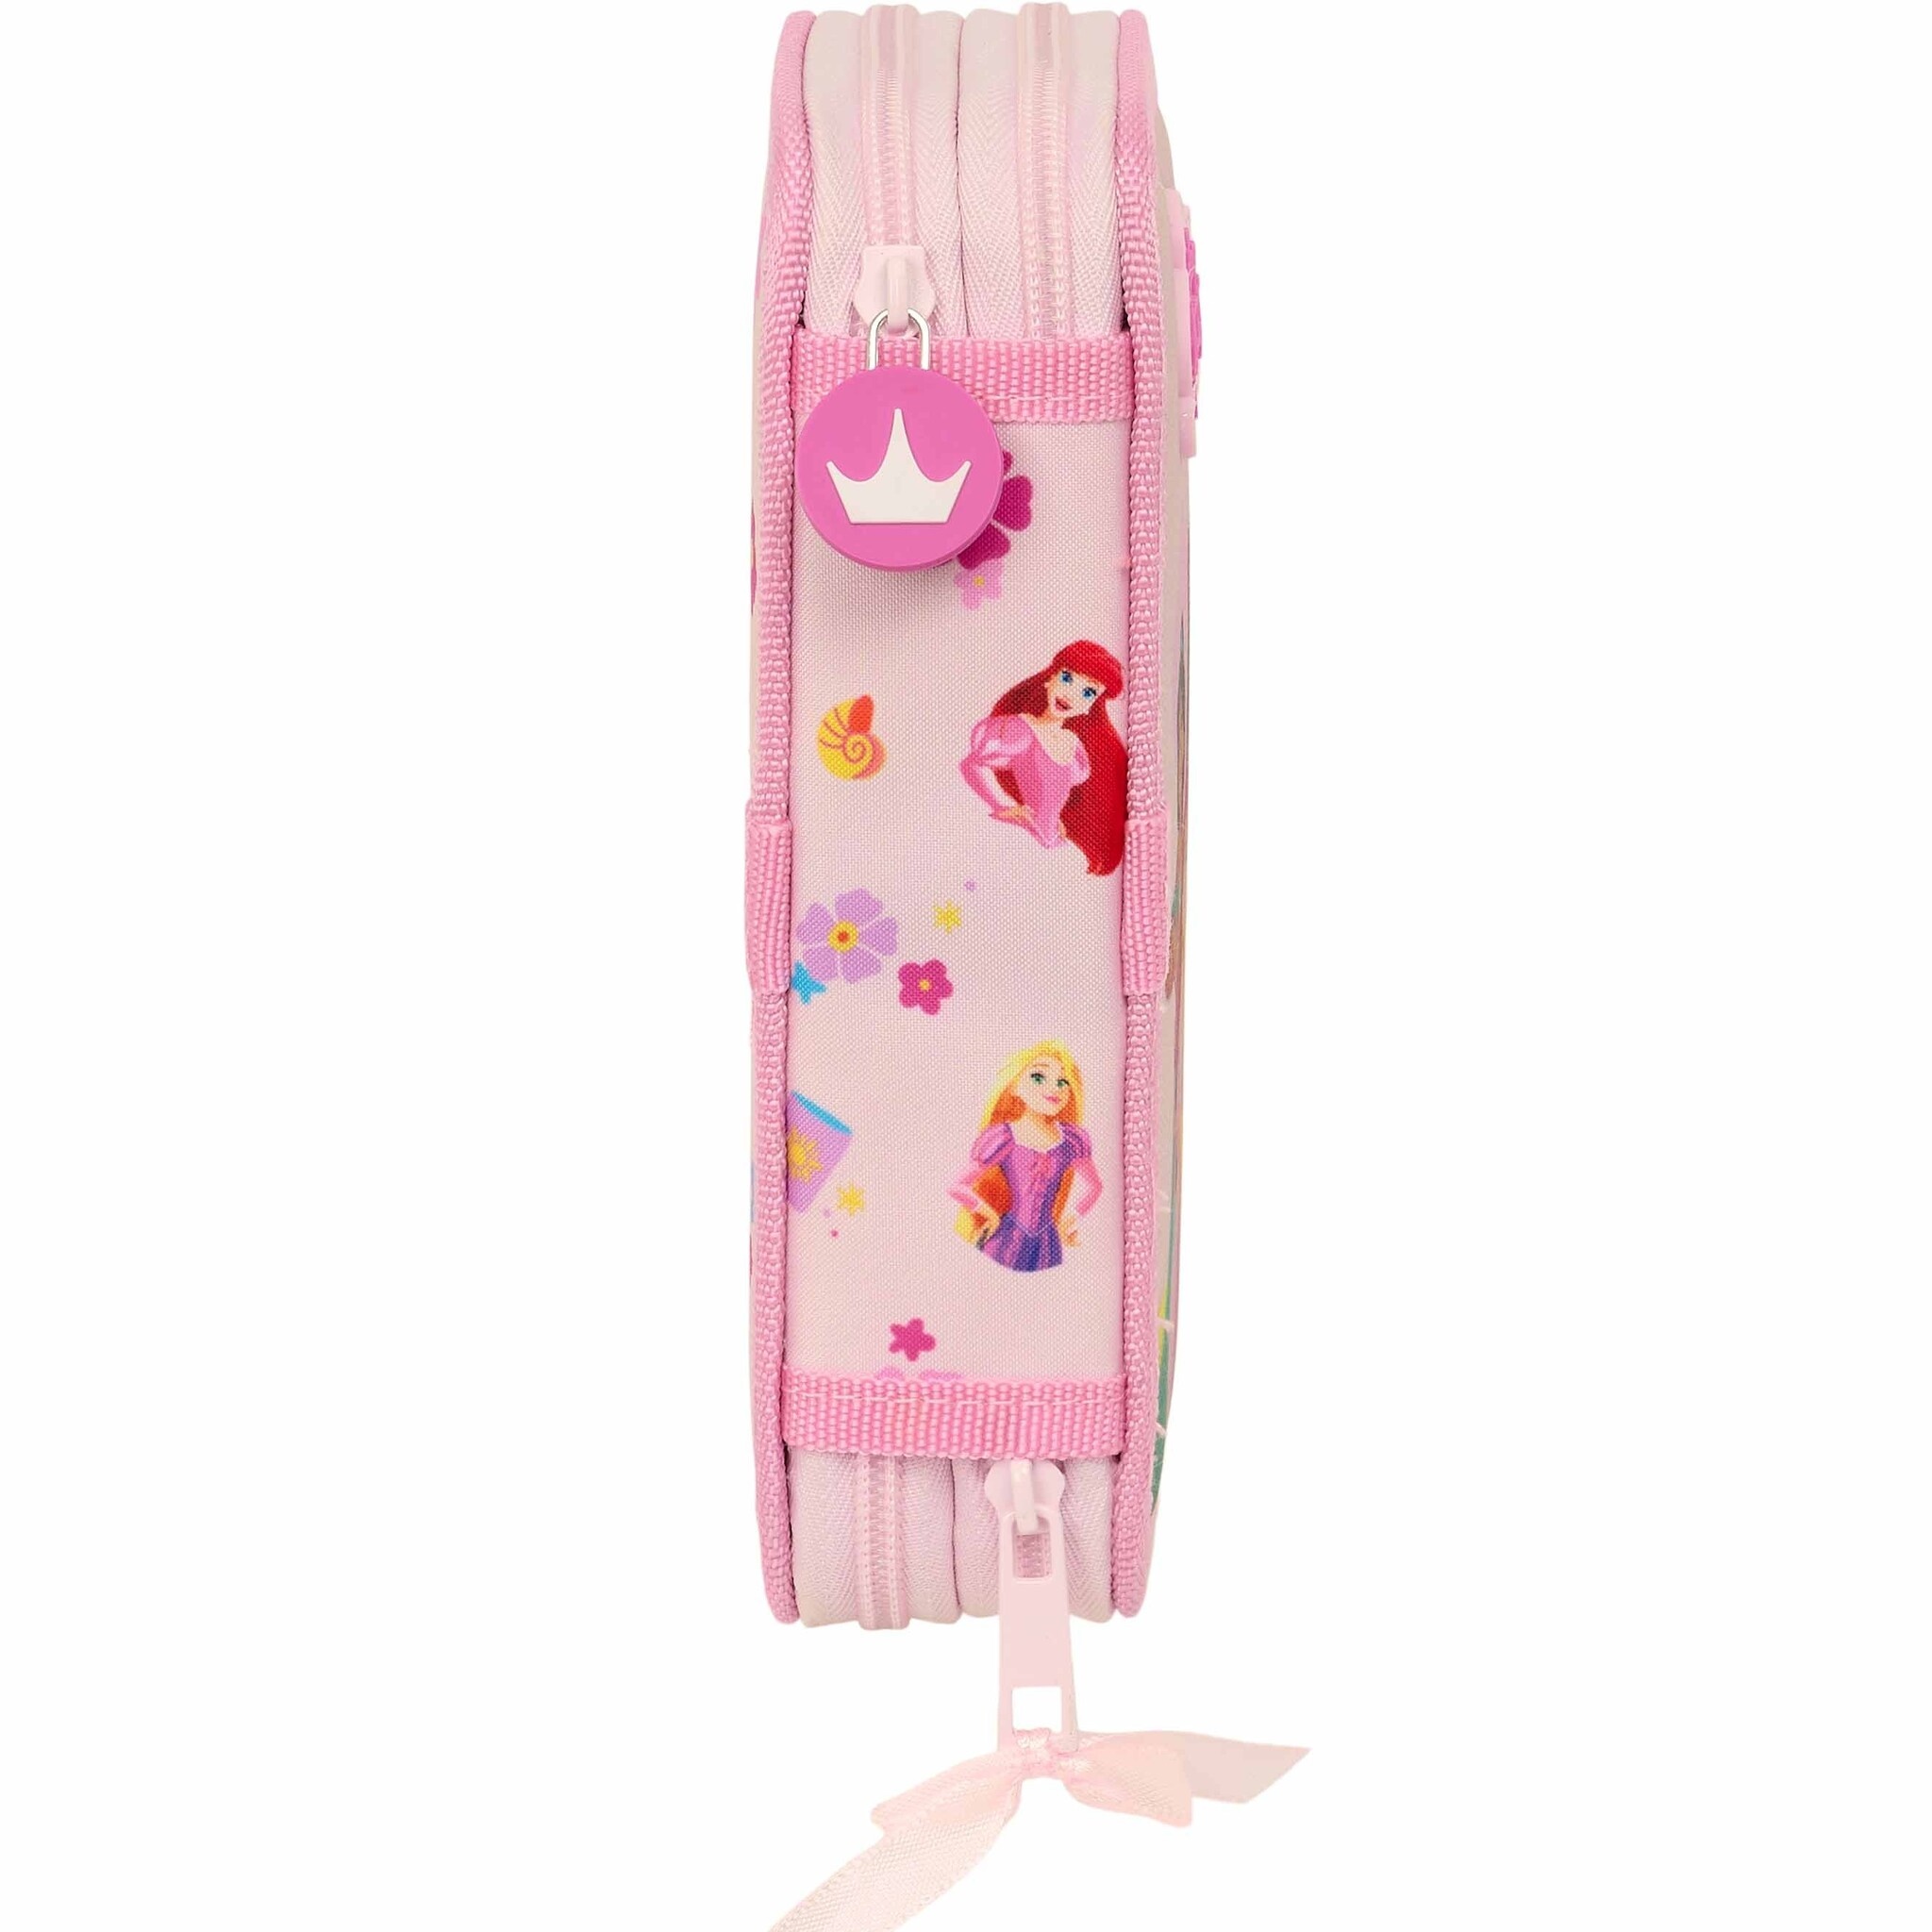 Disney Princess Filled Pencil Case, Summer Adventures - 28 pcs. - 19.5 x 12.5 x 4 cm - Polyester